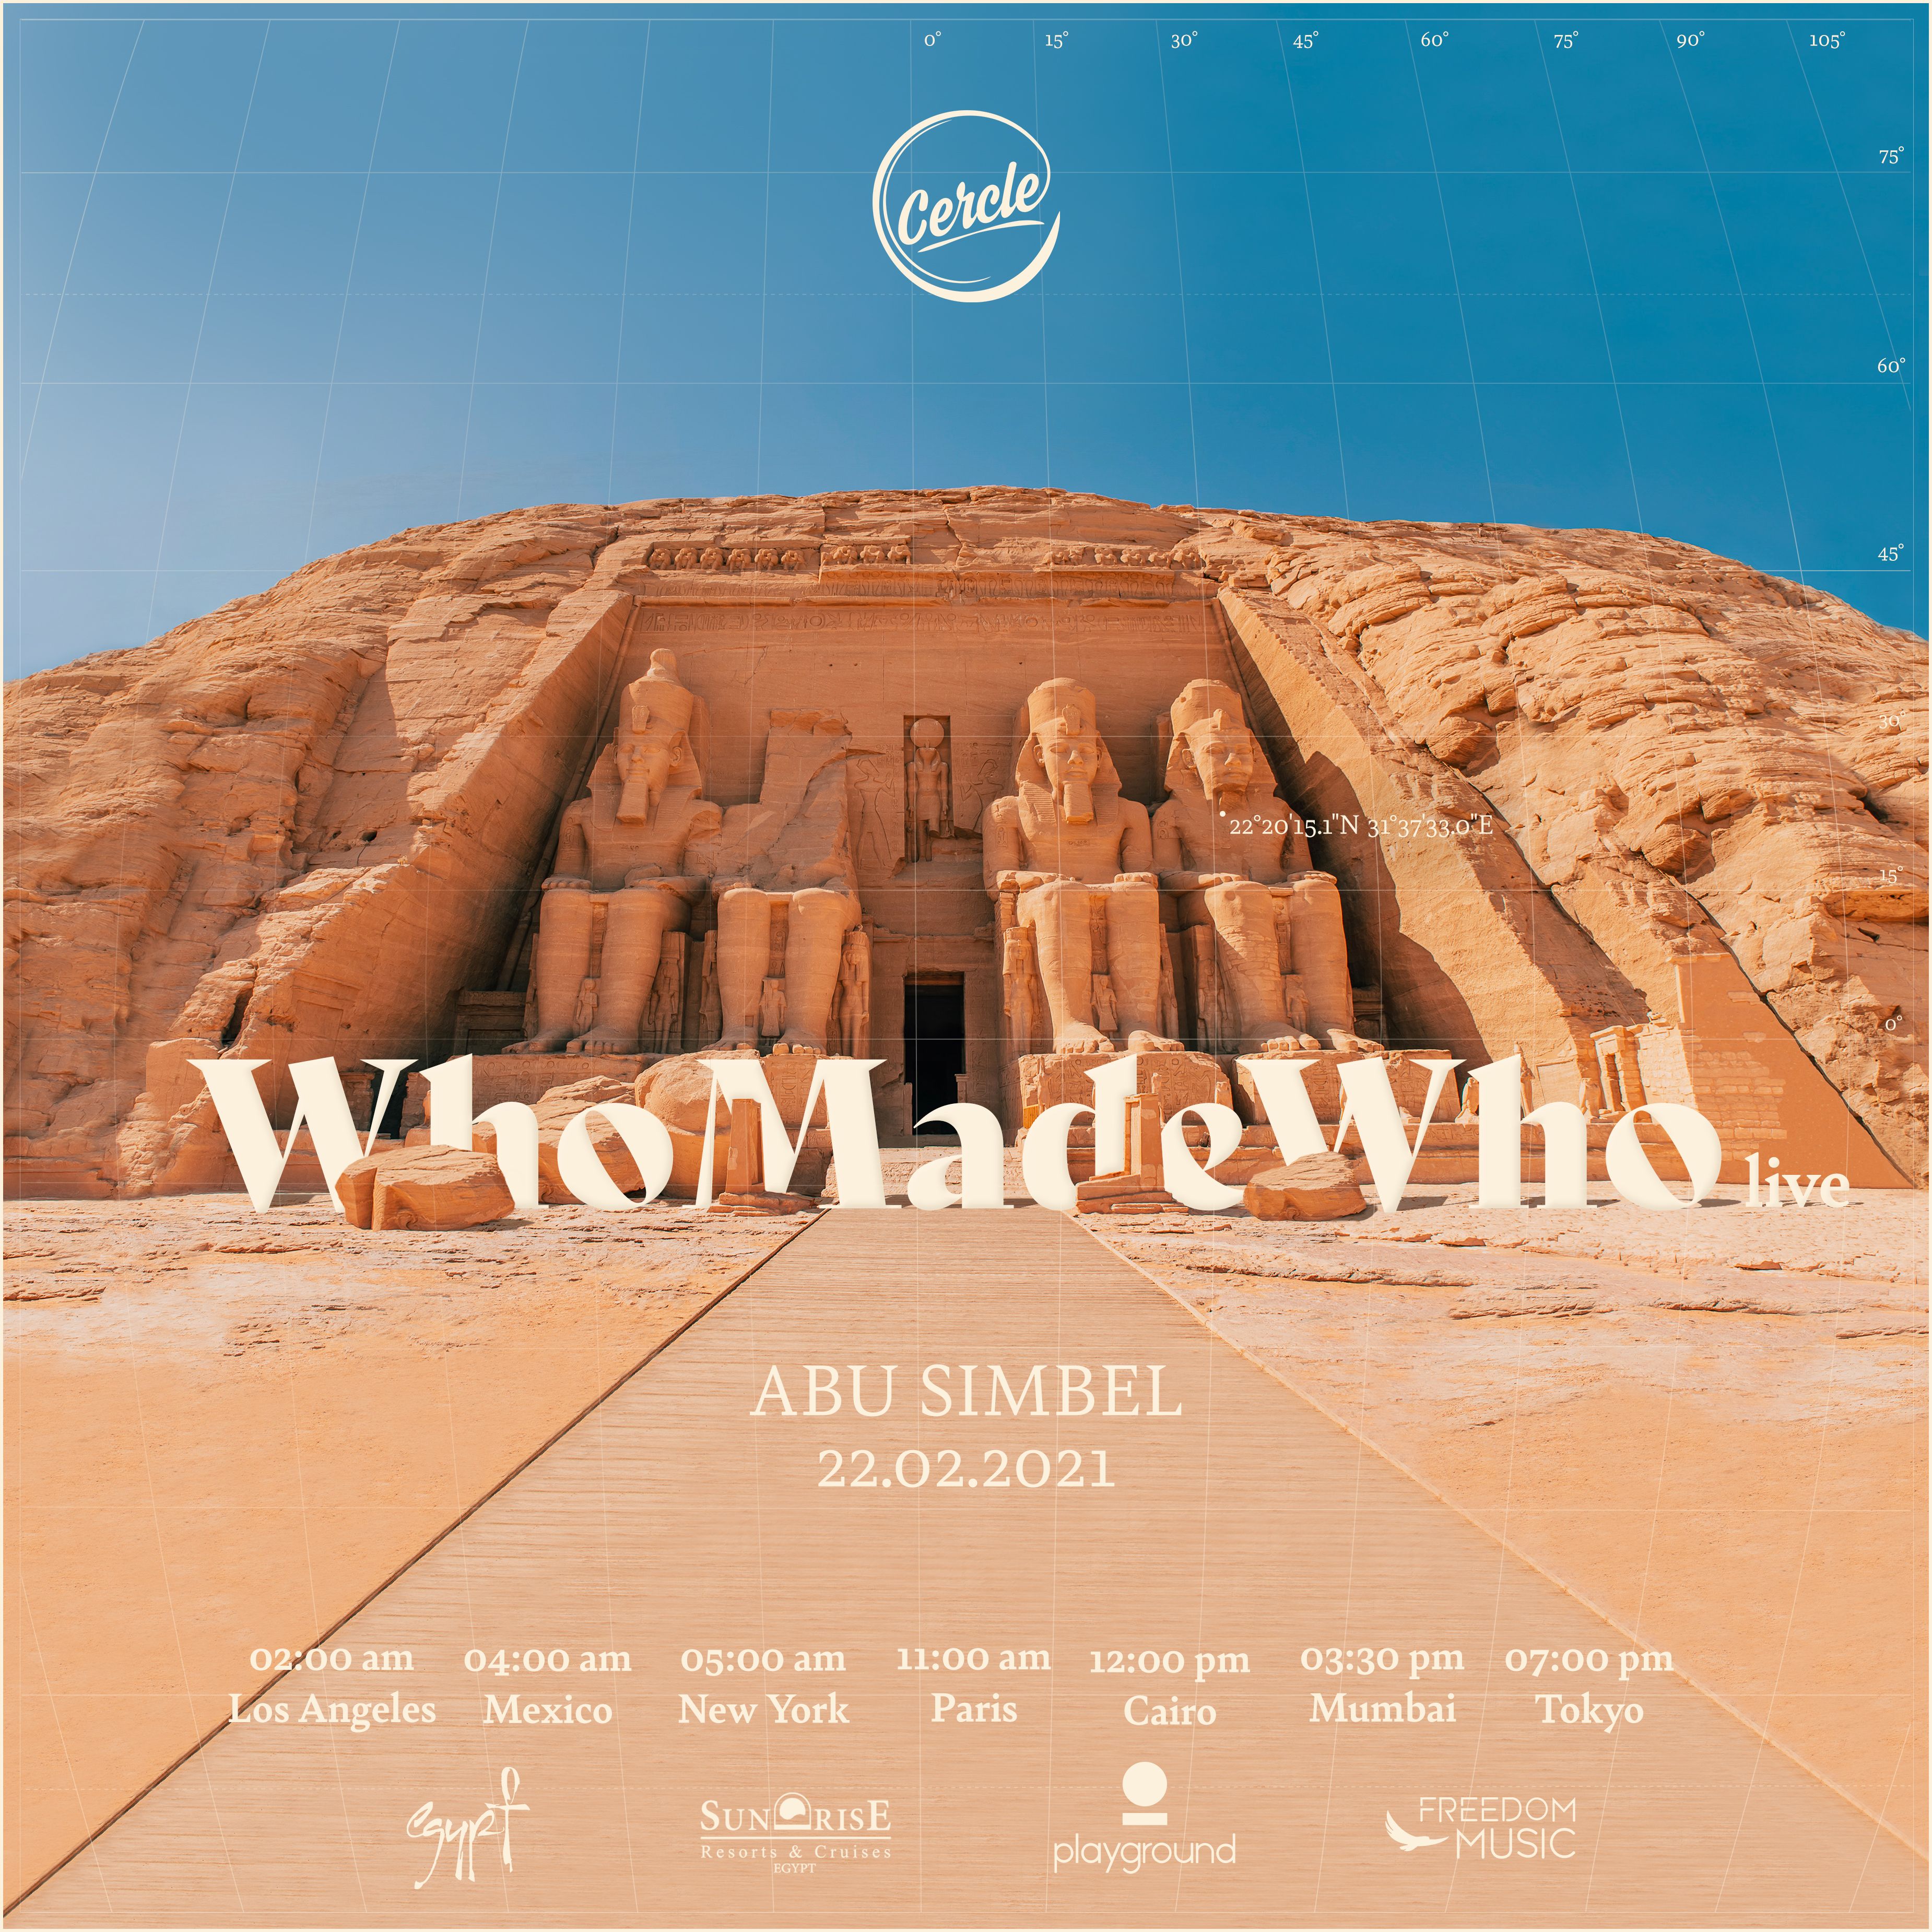 אראפקאפיע WhoMadeWho live at Abu Simbel, Egypt for Cercle